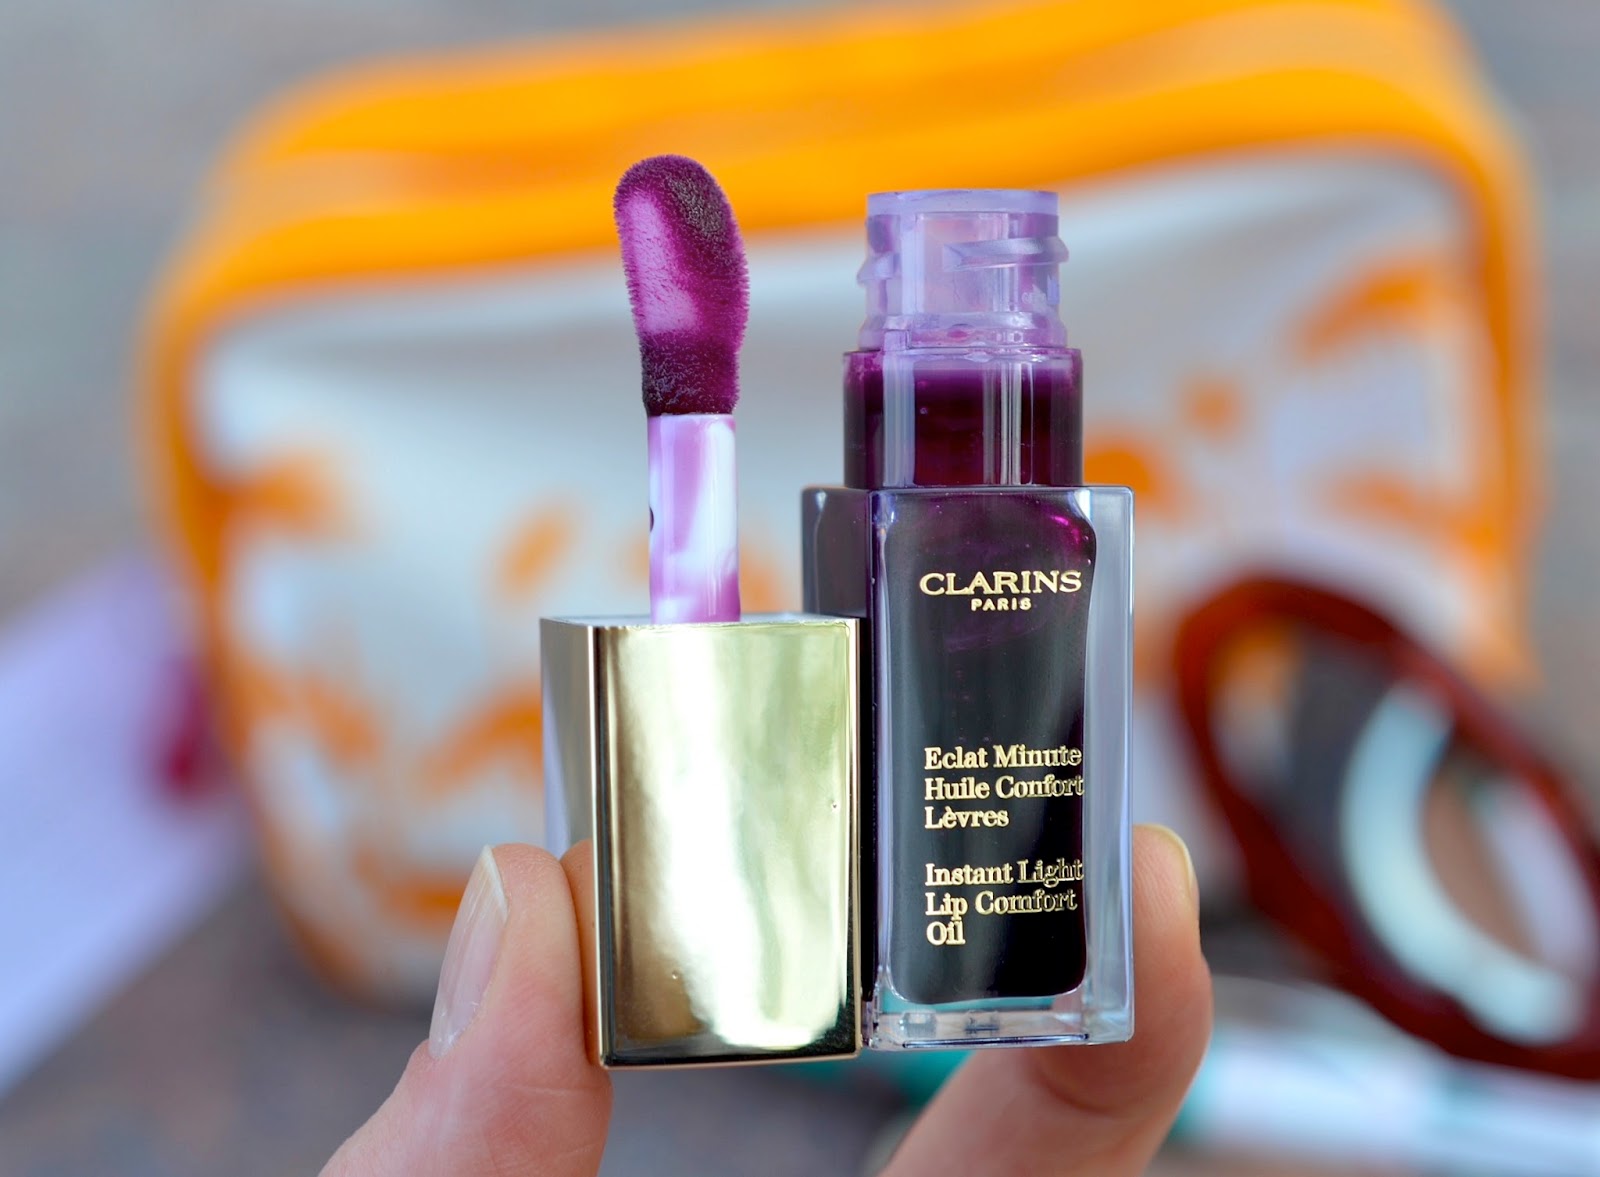 Clarins Summer 2018 Lip Comfort Oil